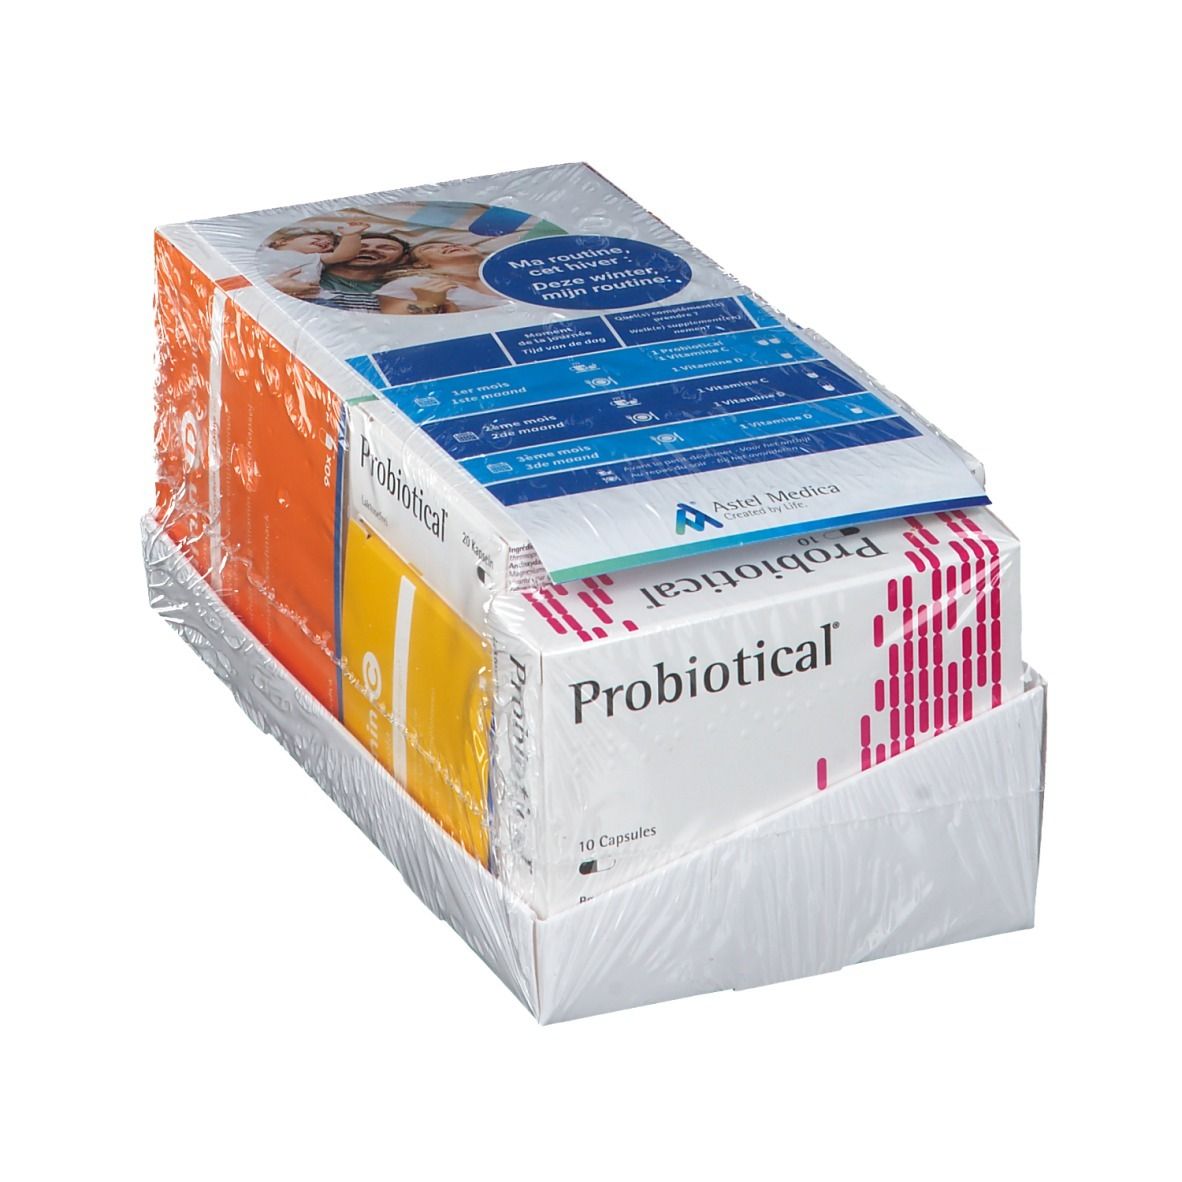 Astel Medica Pack + Probiotical GRATIS